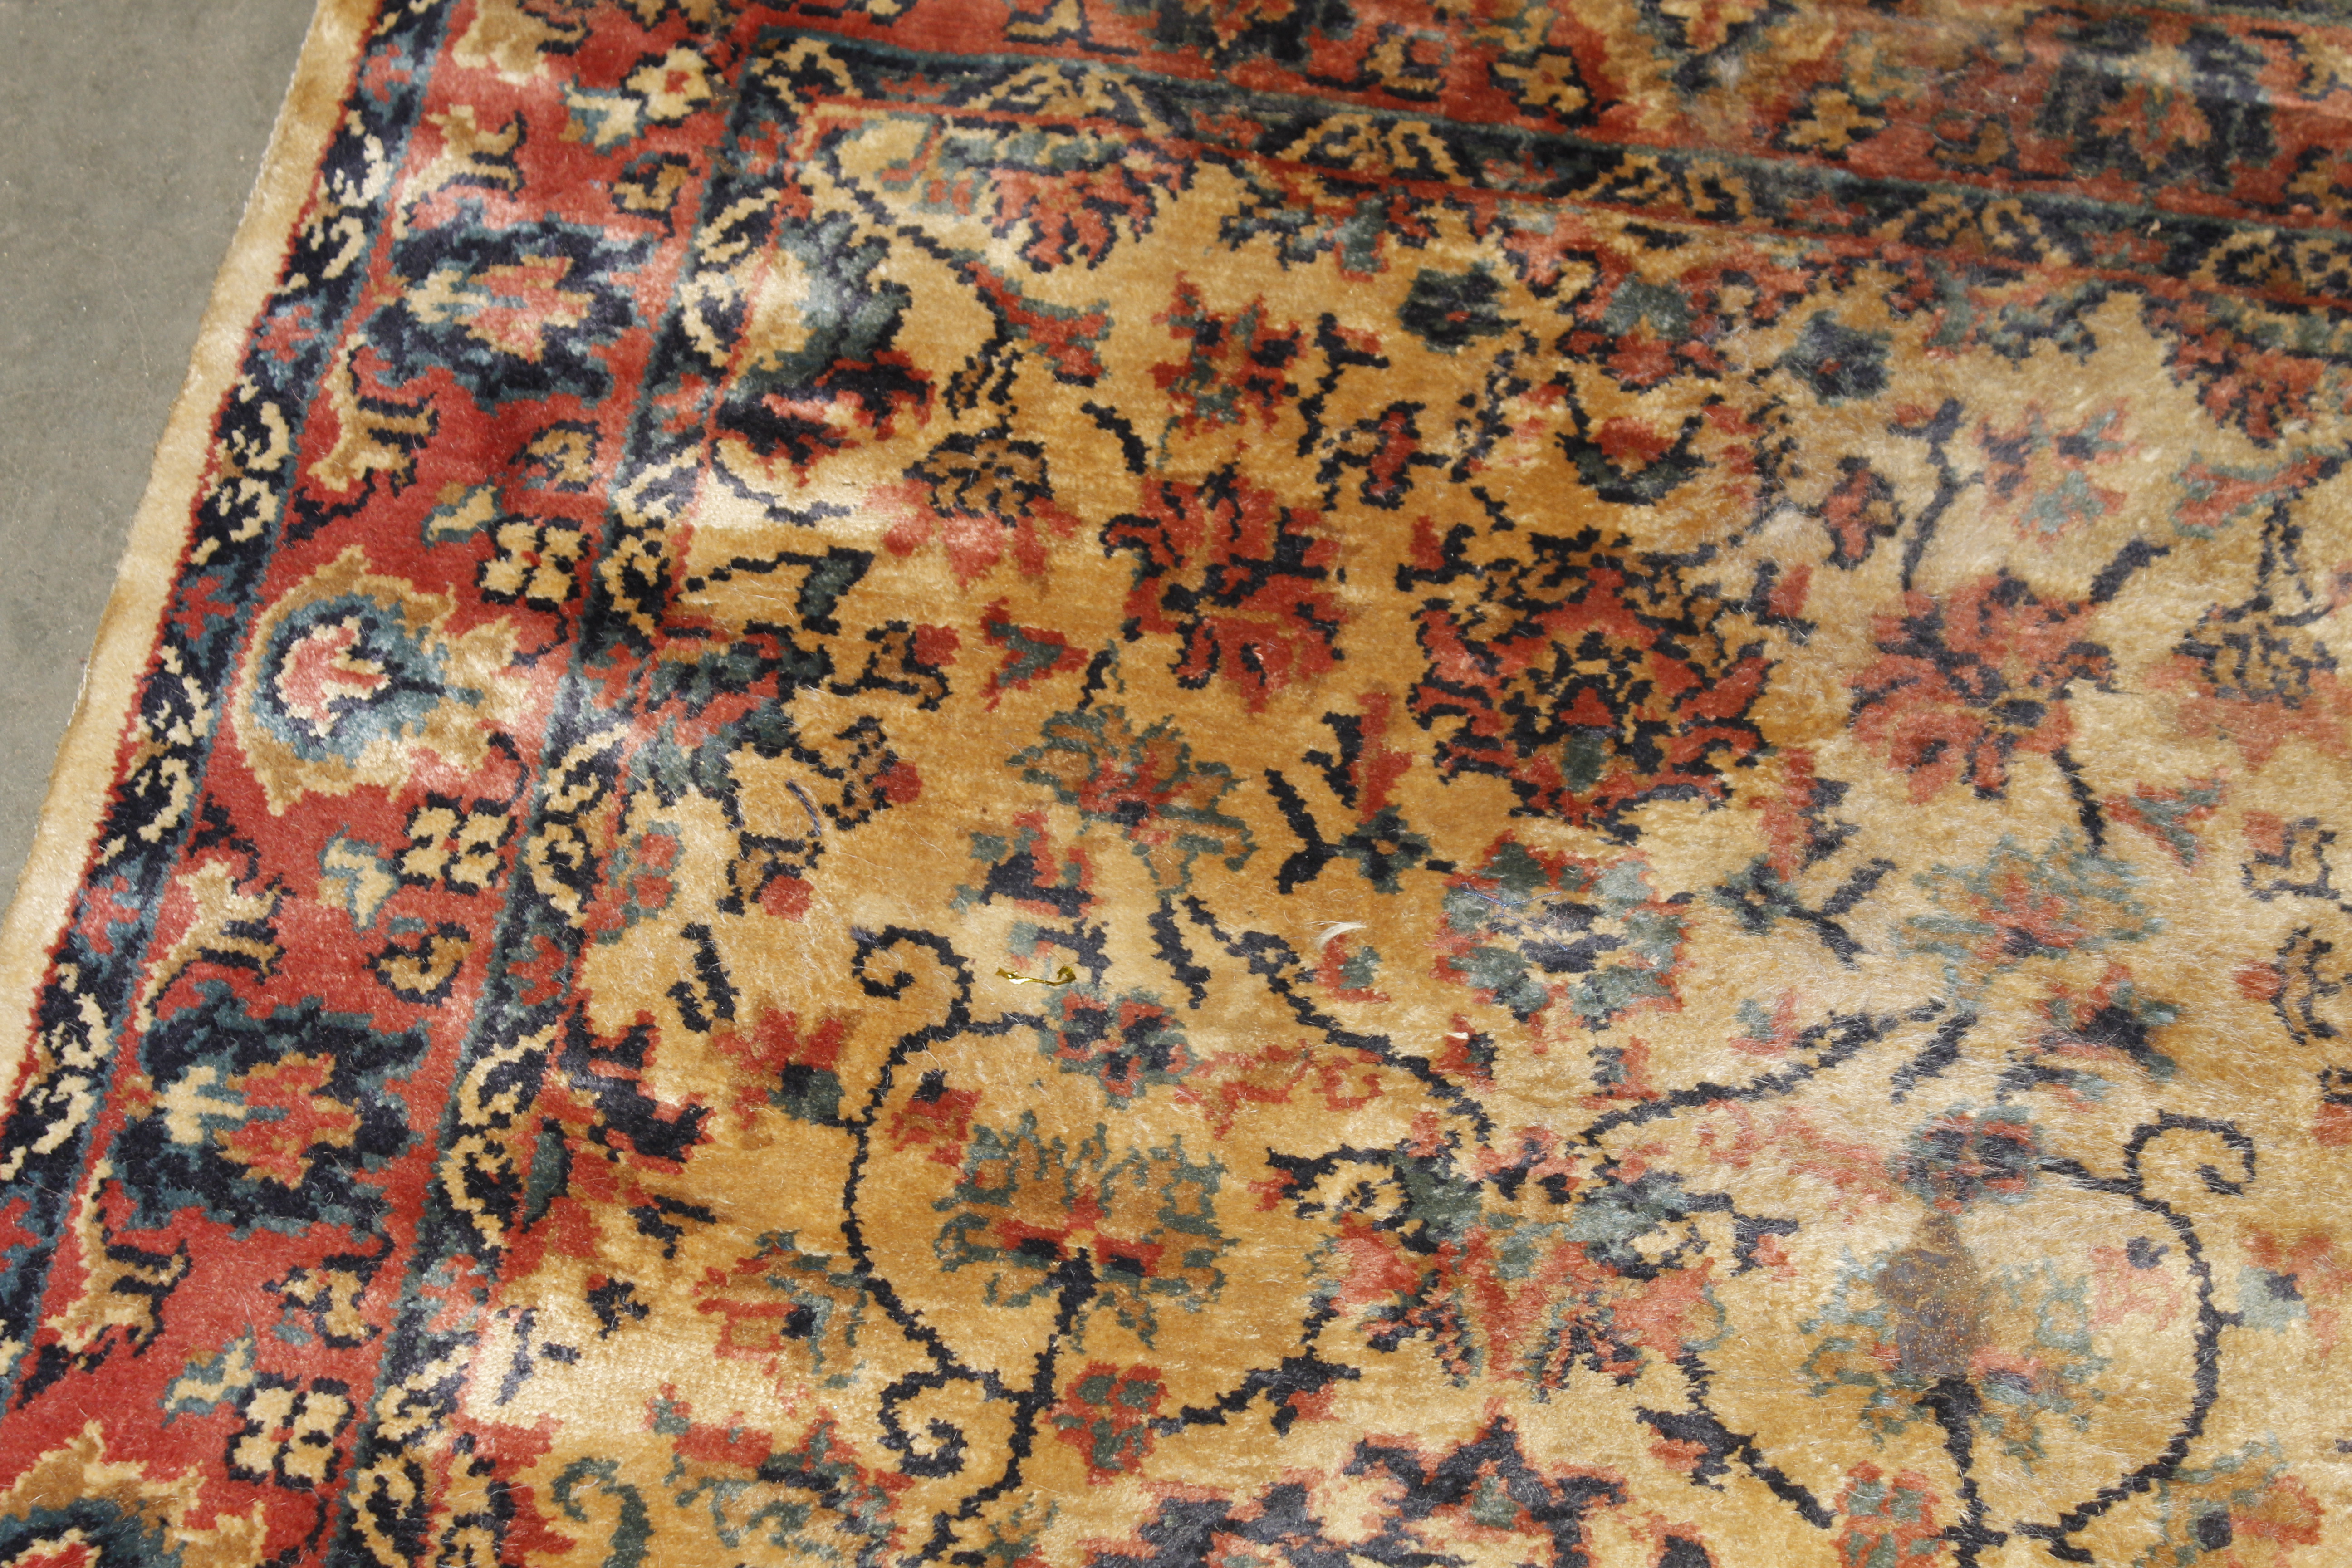 An approx. 5'3" x 3' floral patterned rug AF - Image 3 of 6